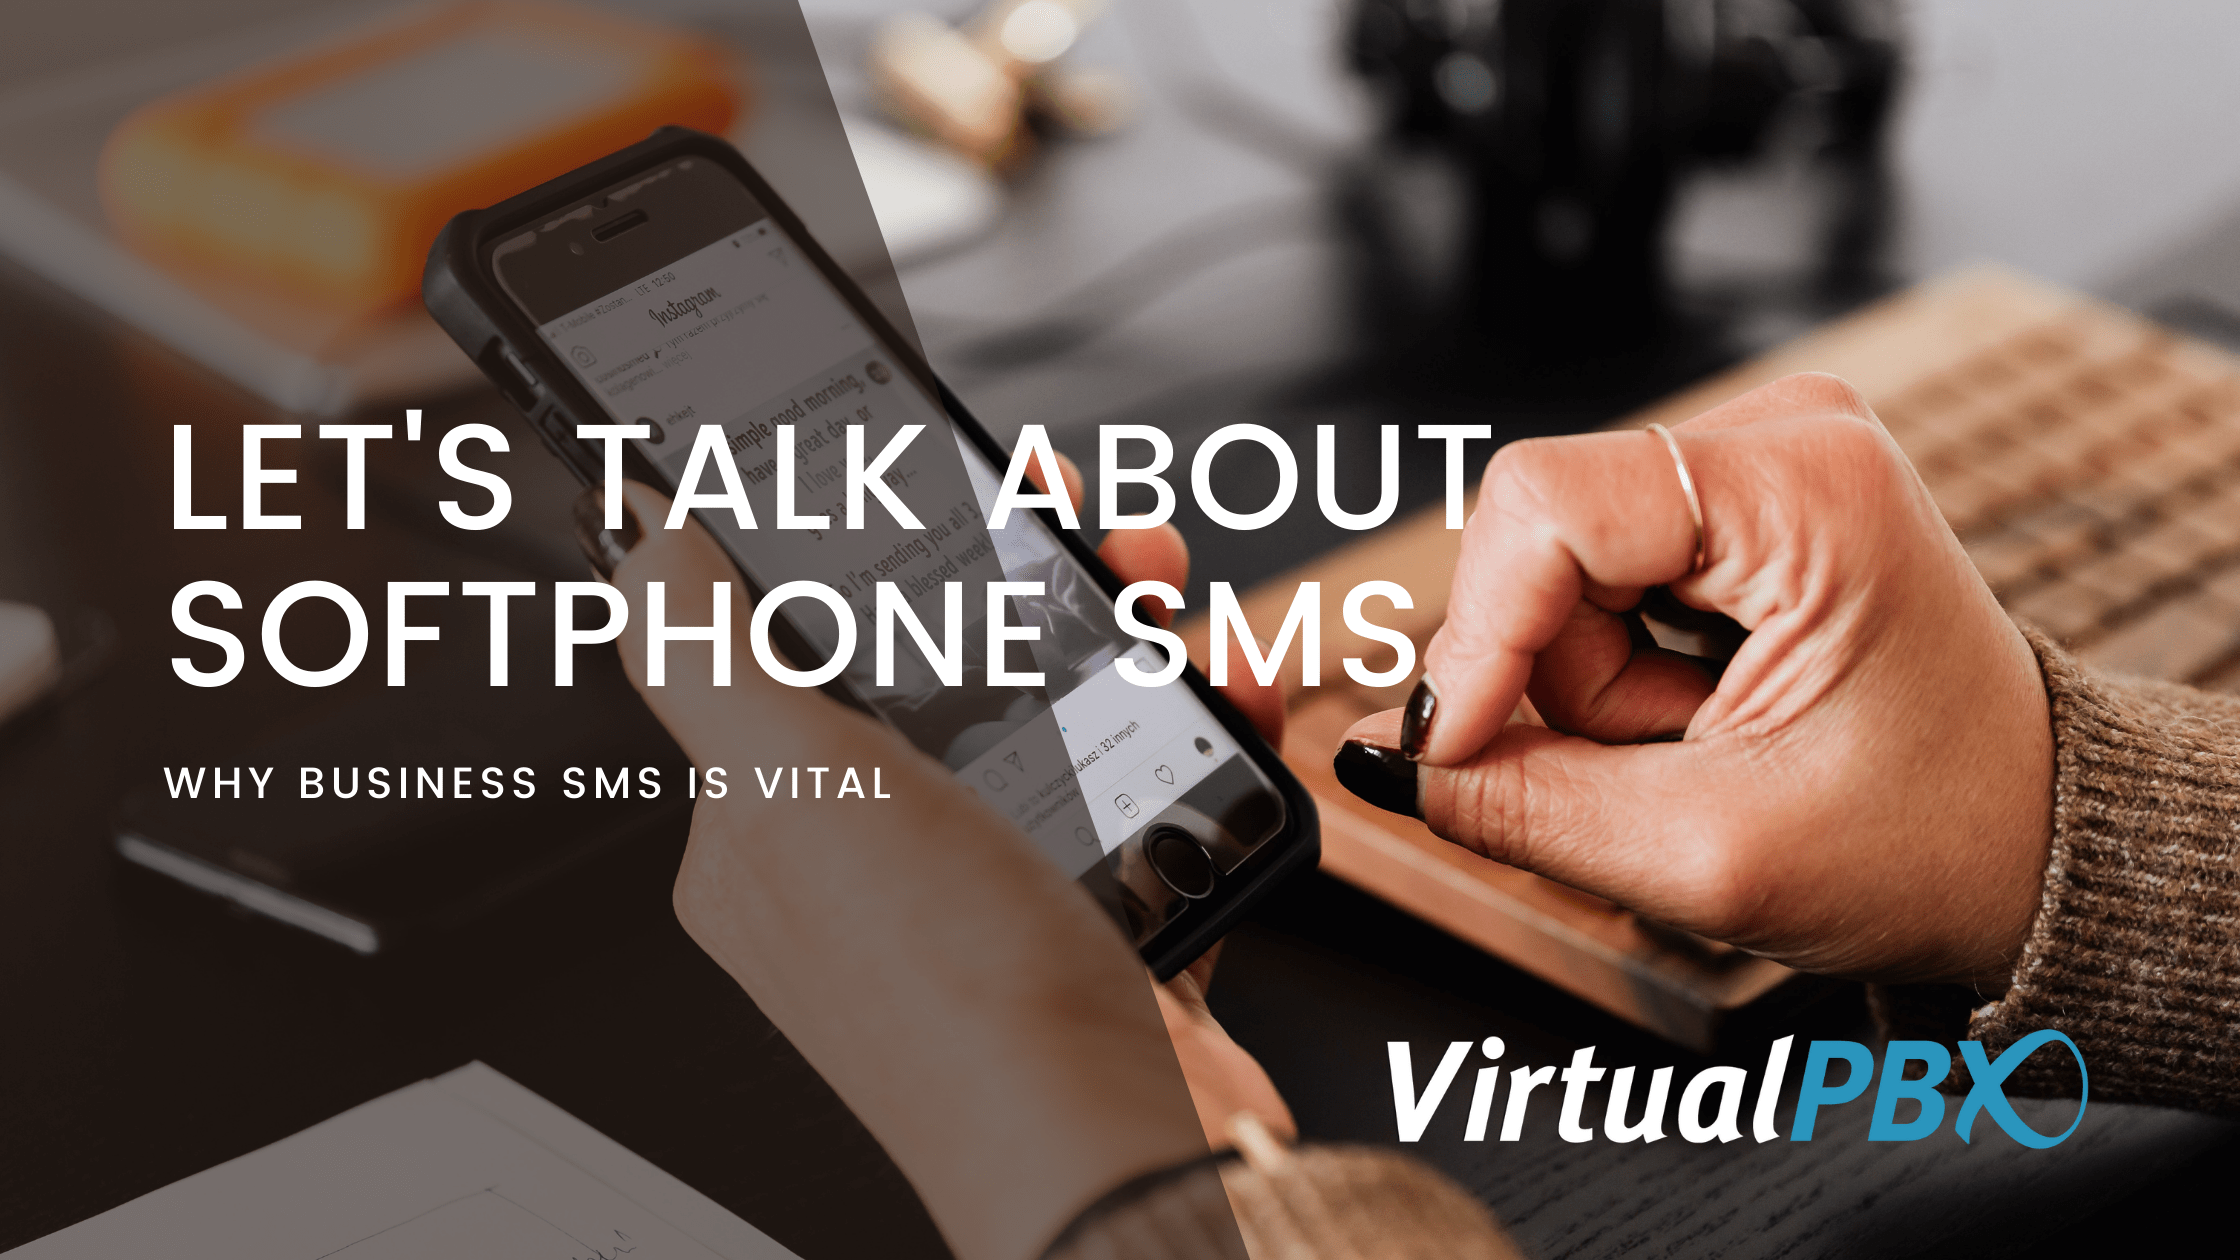 Softphone SMS